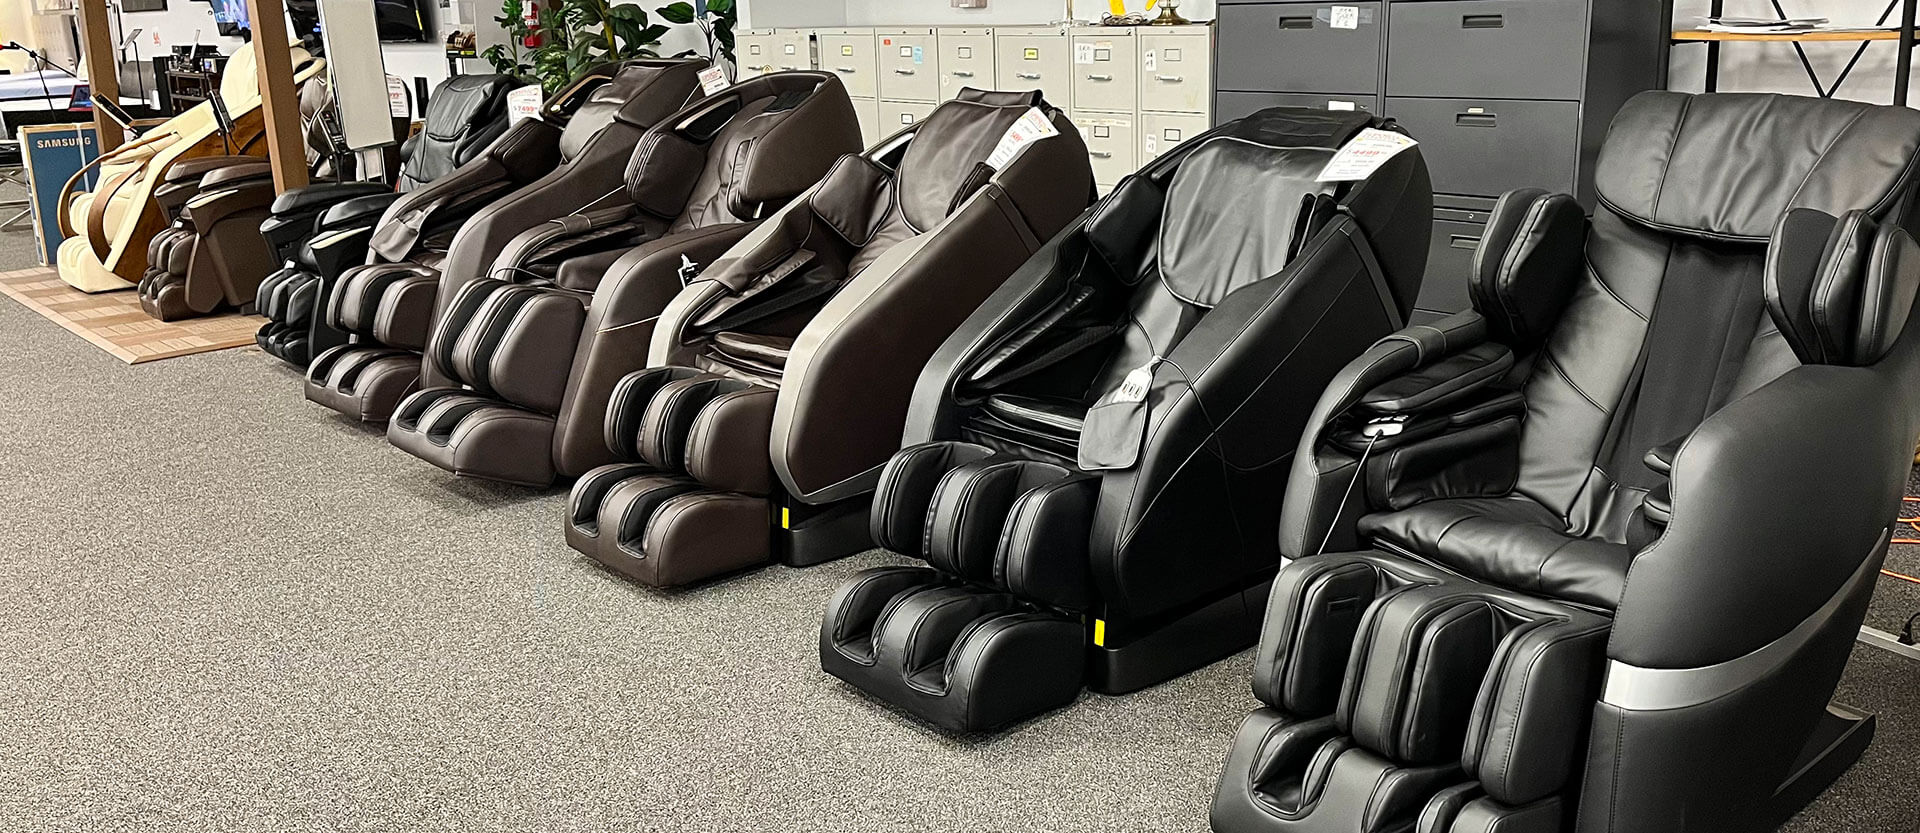 Superco Massage Chair Lineup